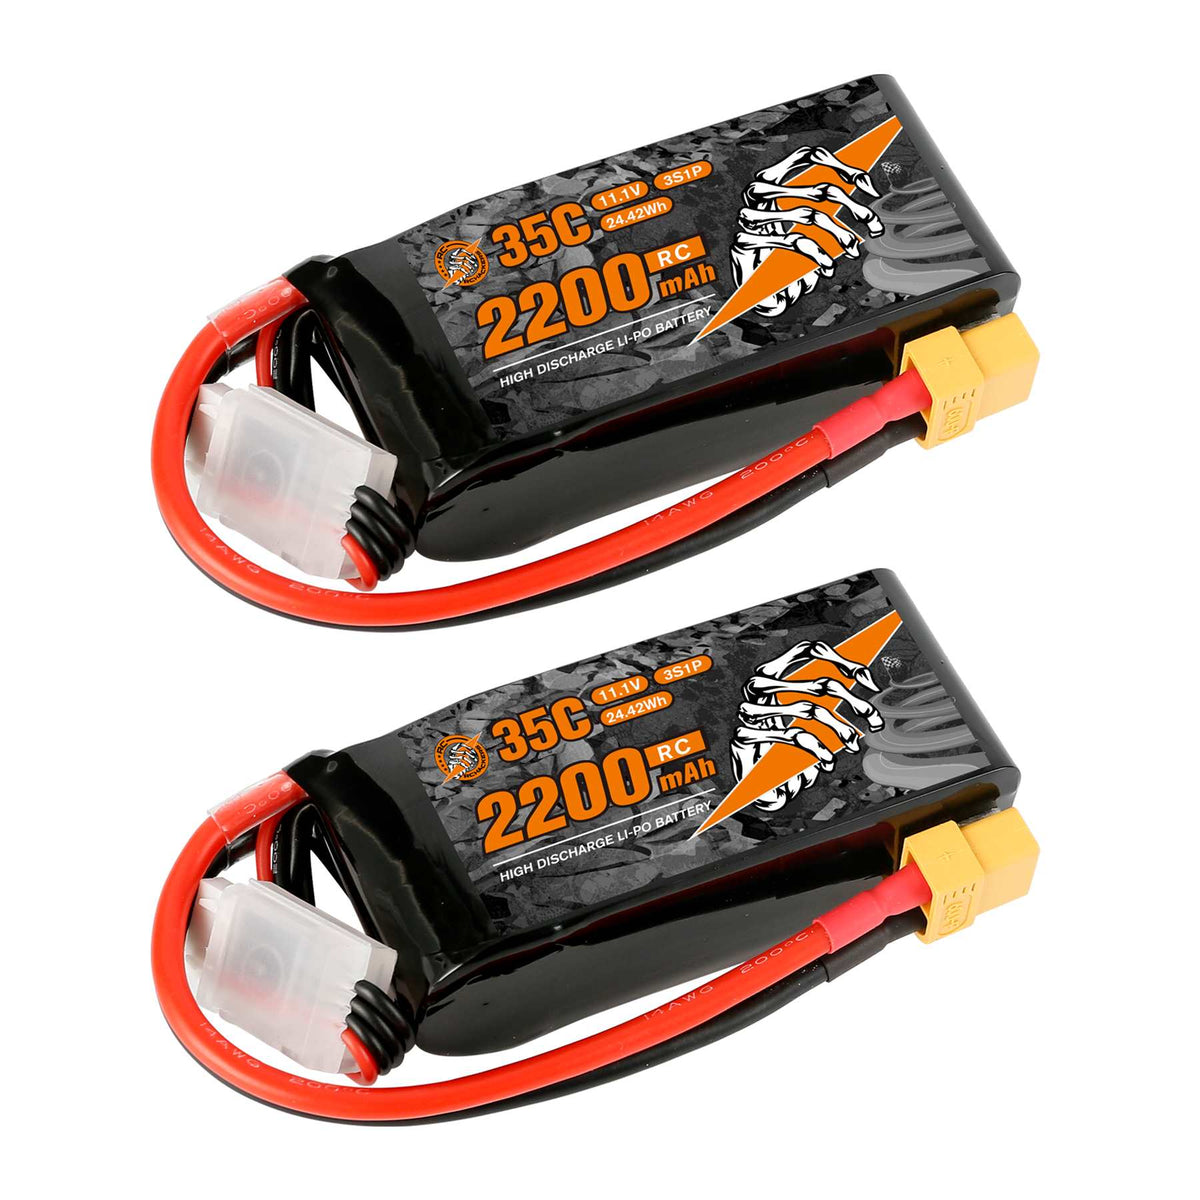 Batterie LiPo 3S LemonRC 1600mah - 11,1V (35C) XT60